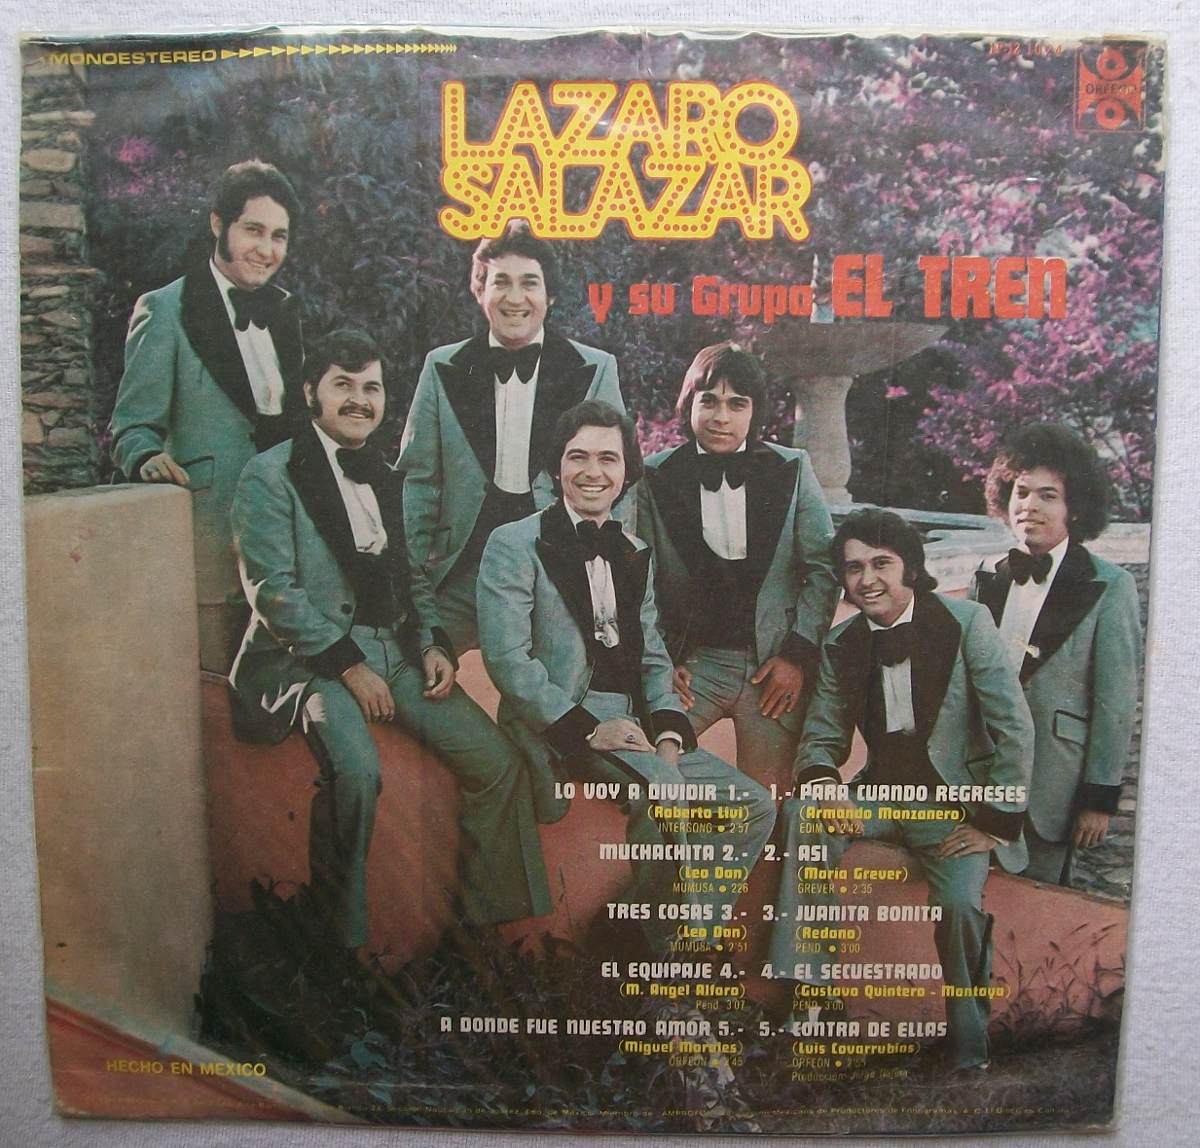 Grupo El Tren Lazaro Salazar